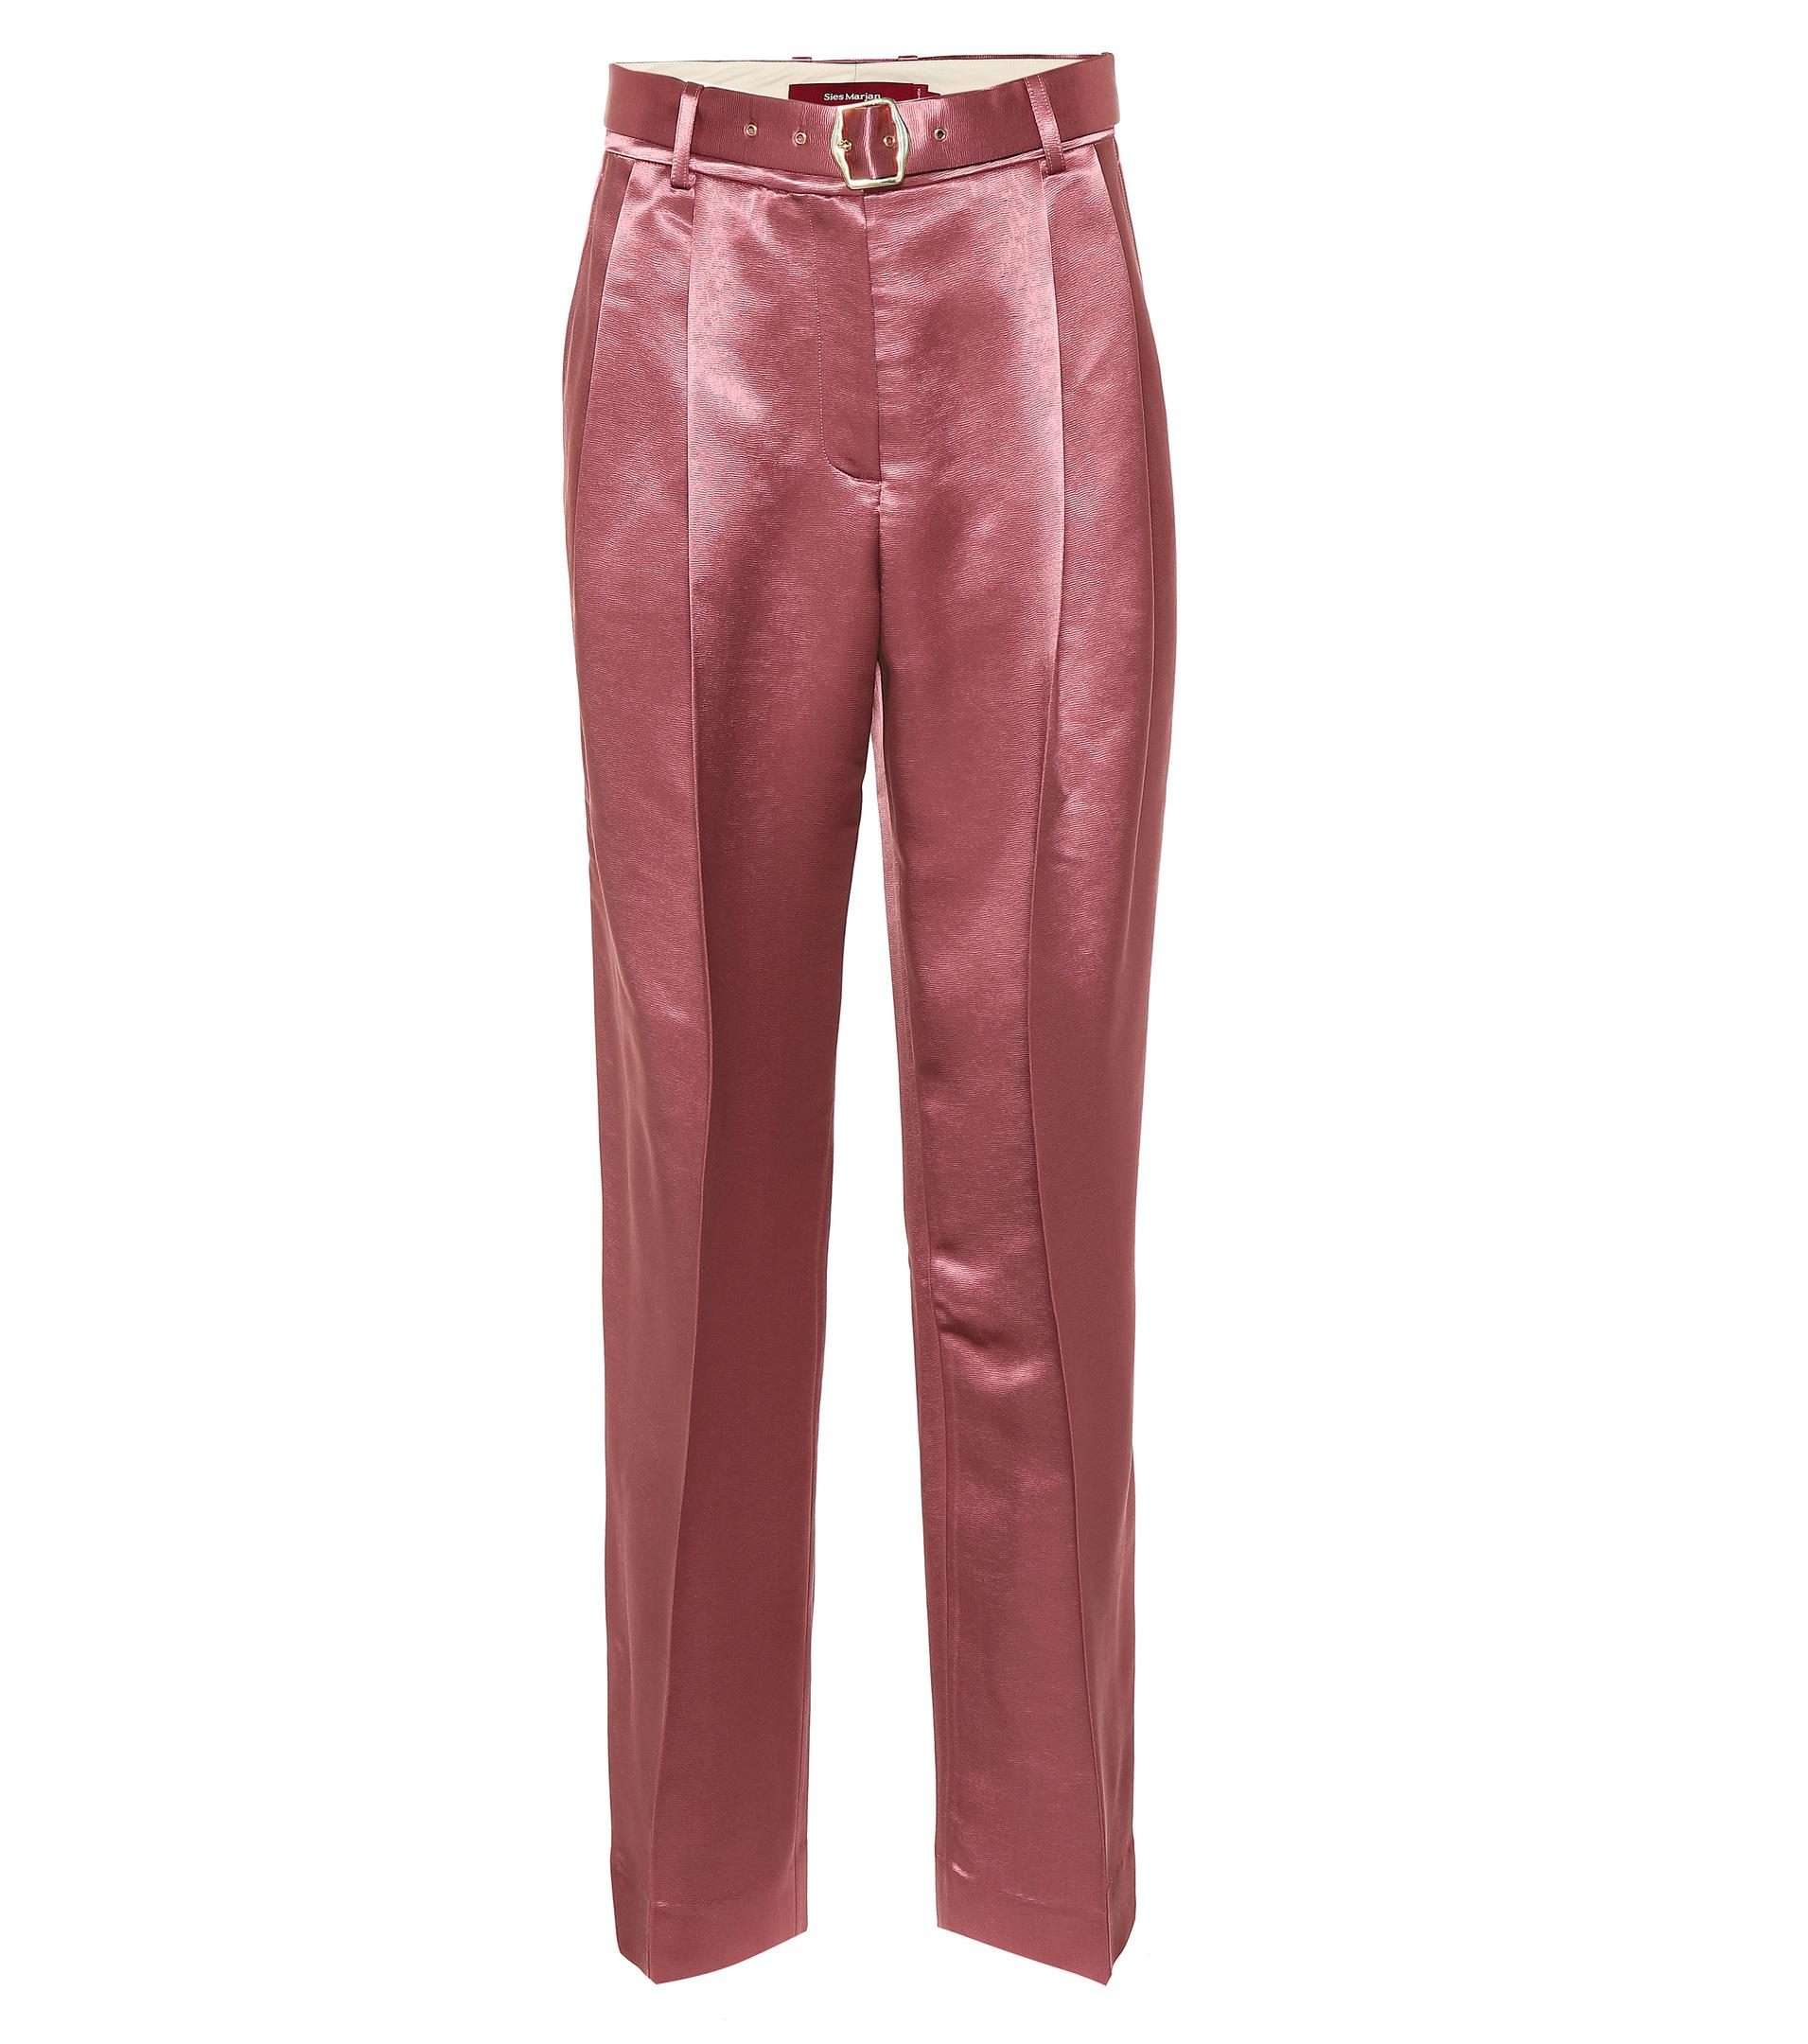 Sies Marjan Blanche Satin Wide-leg Pants in Pink - Lyst